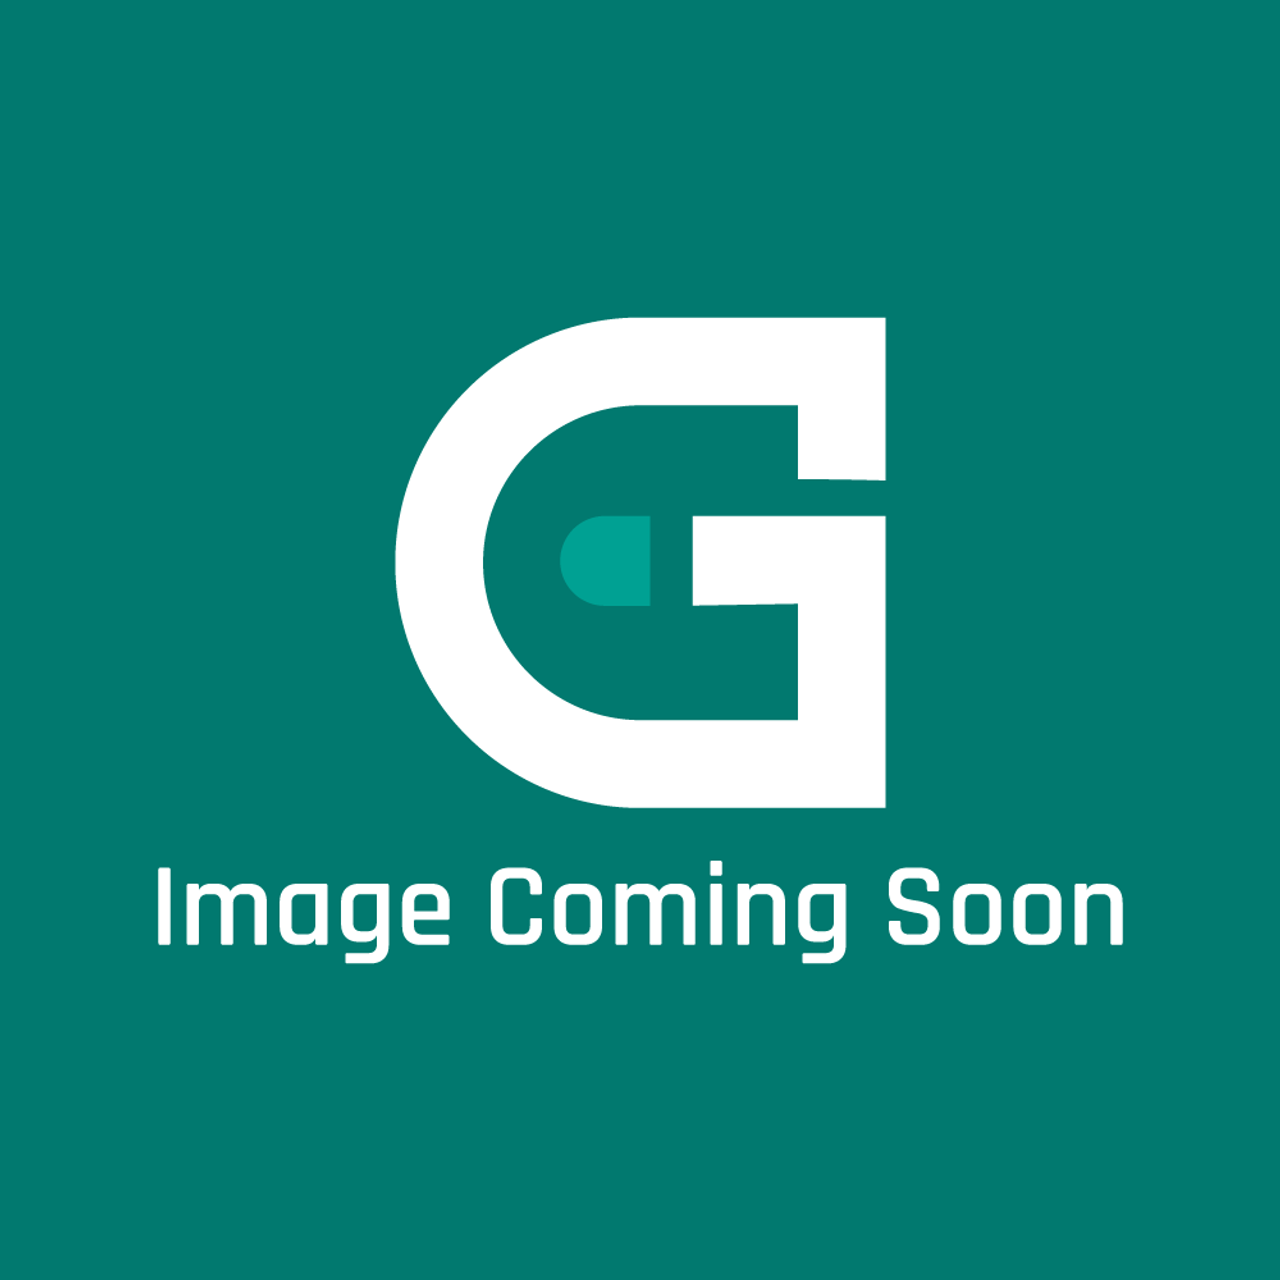 GE Appliances WR09X20596 - Switch Rocker - Image Coming Soon!